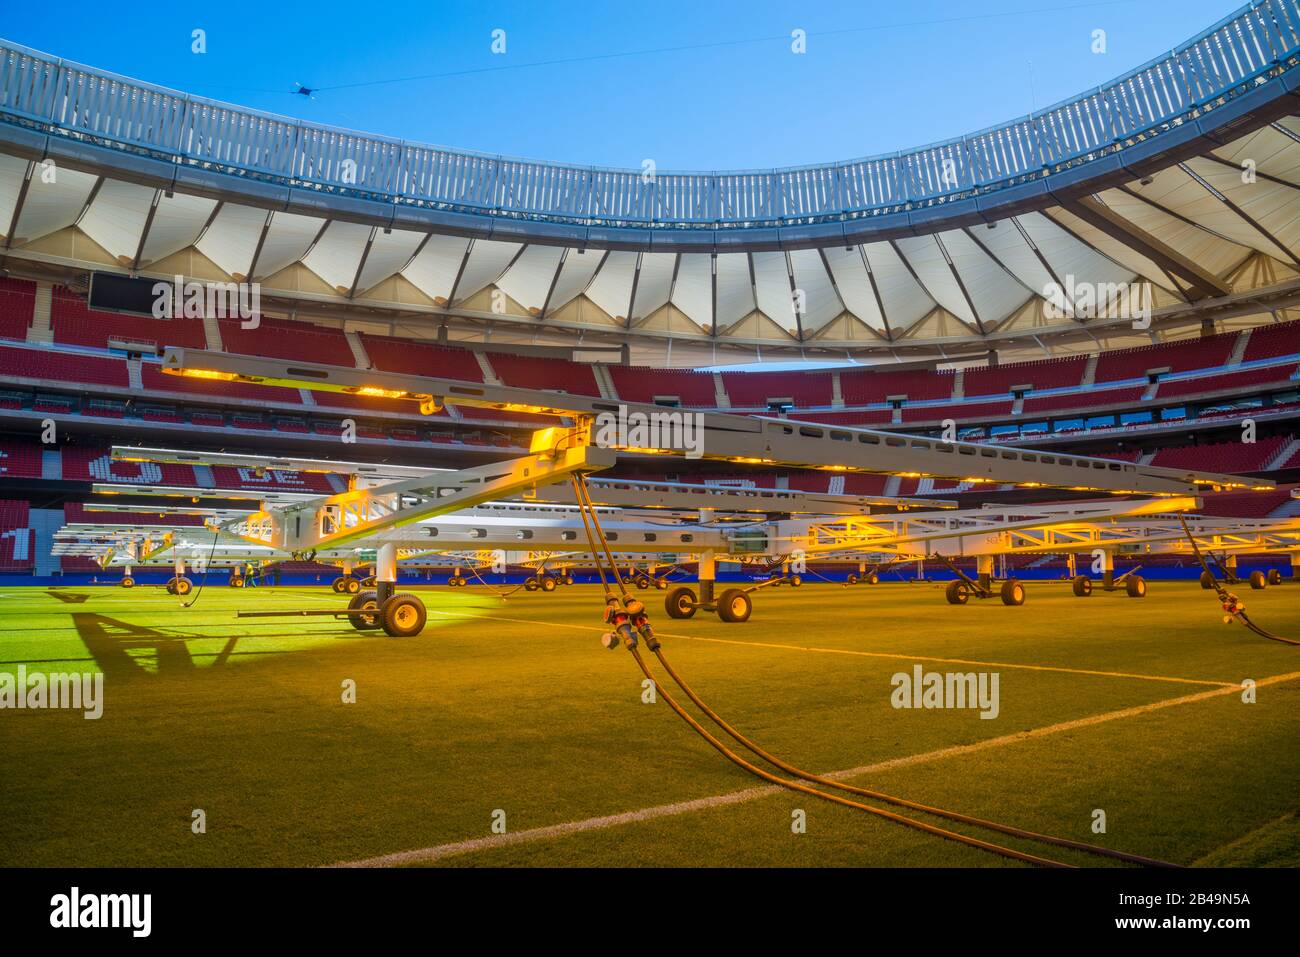 Preparing the field. Wanda Metropolitano stadium, Madrid, Spain. Stock Photo